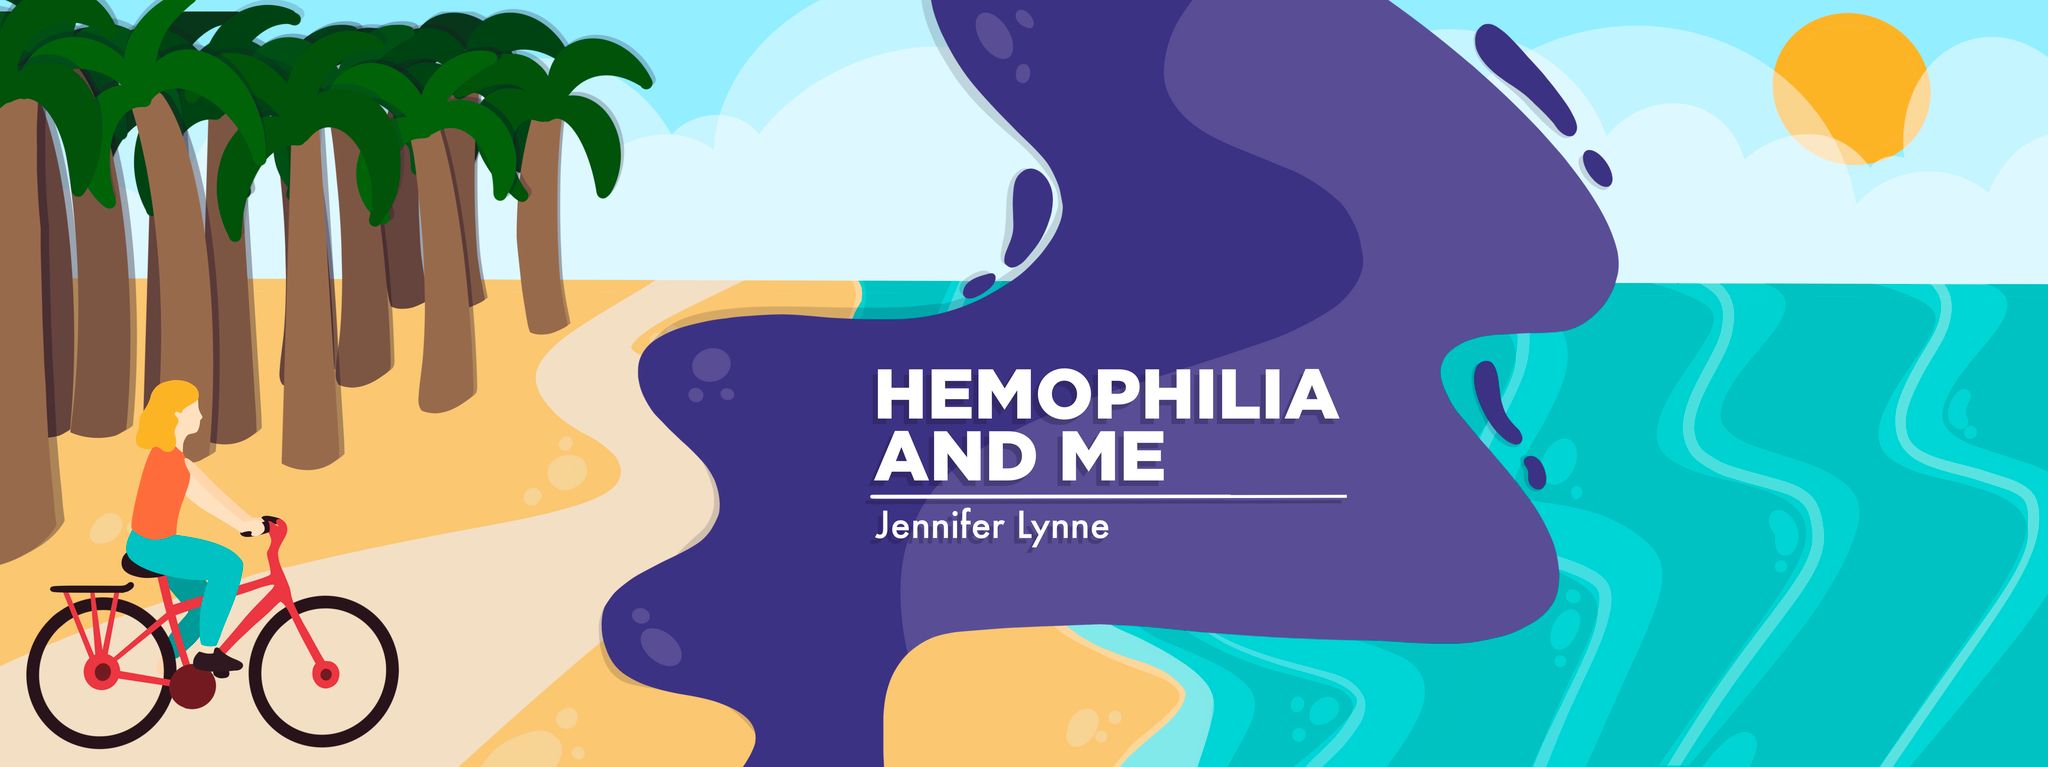 hemophilia care plan for school | Hemophilia News Today | banner image for 